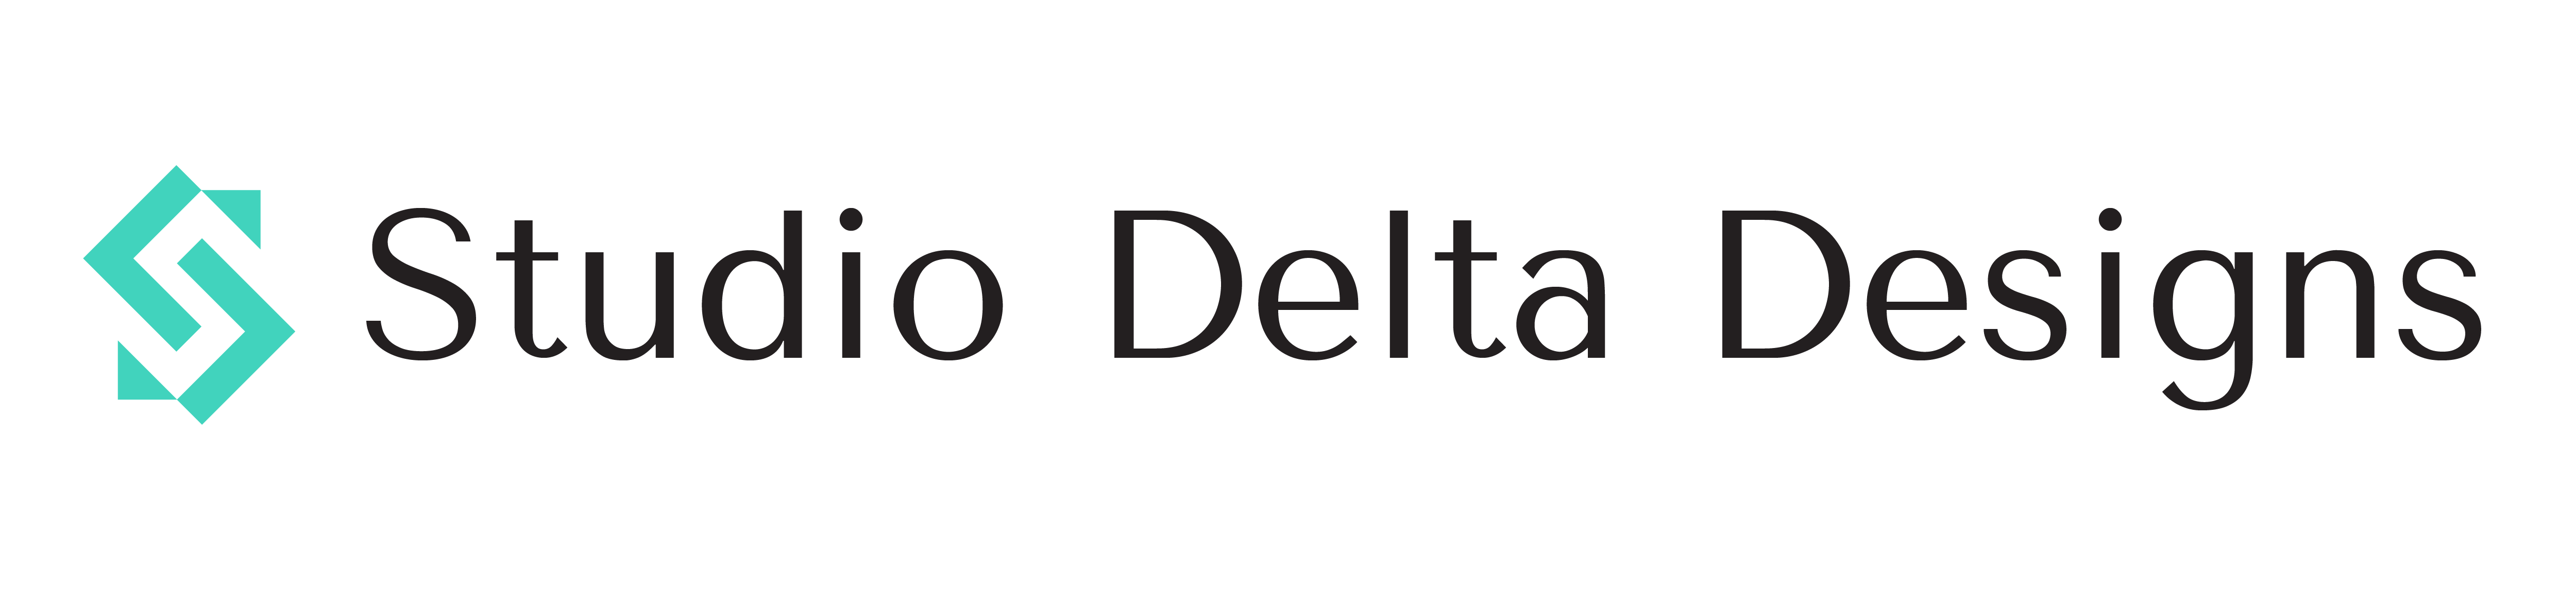 Studio Delta Designs Logo